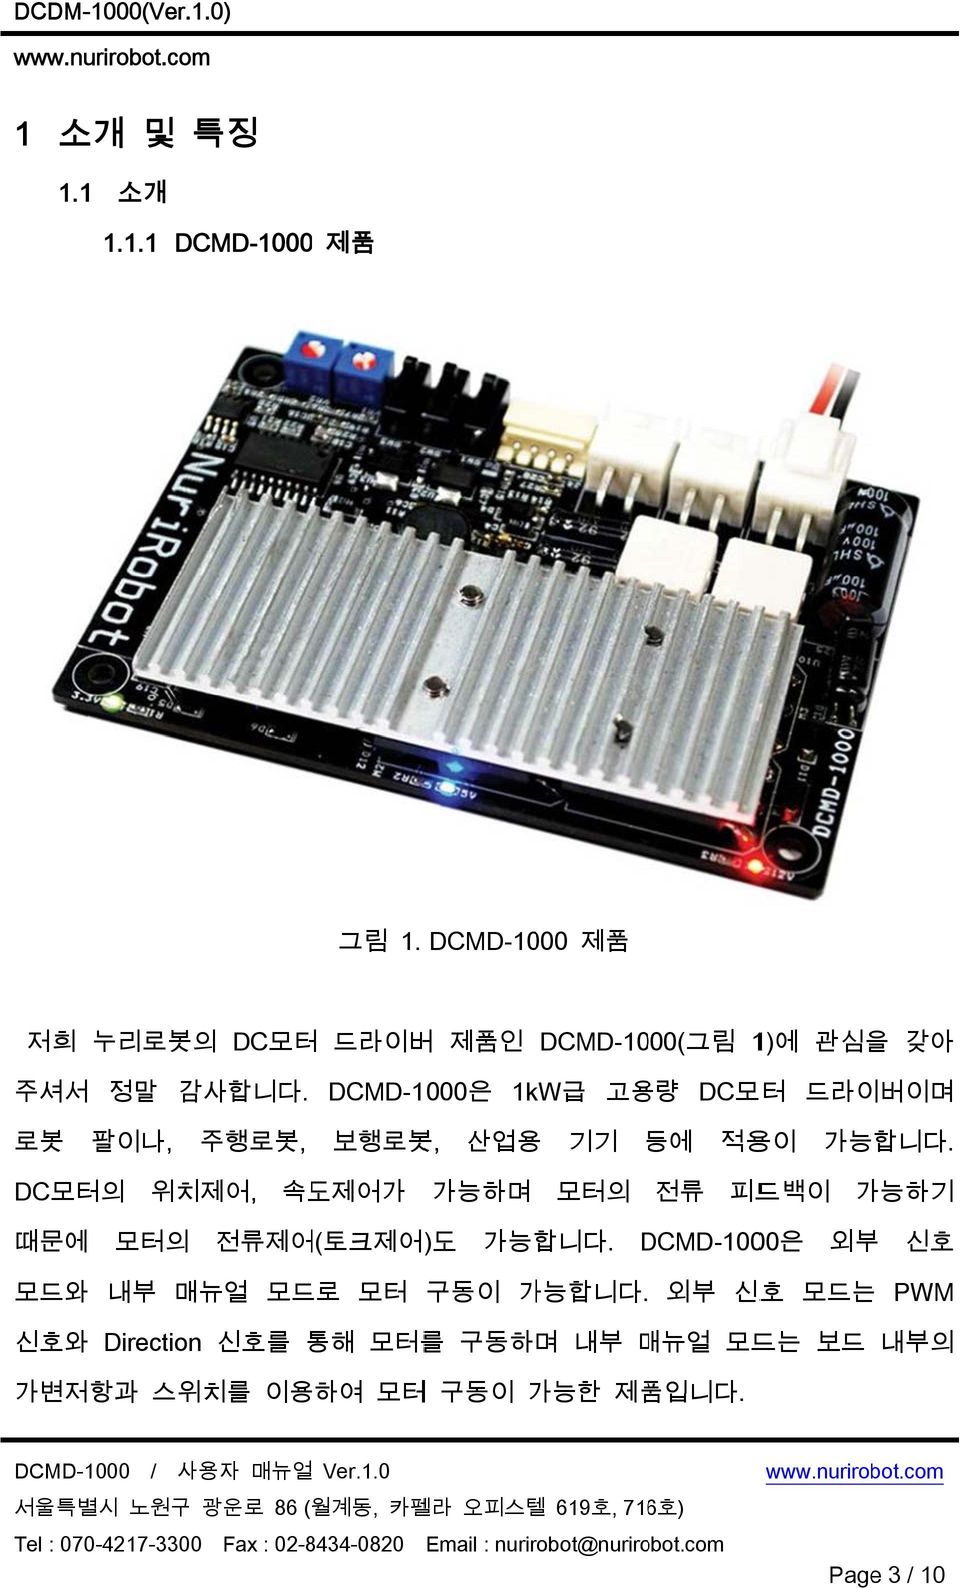 DCMD-1000은 1kW급 고용량 DC모터 드라이버이며 로봇 팔이나, 주행로봇, 보행로봇, 산업용 기기 등에 적용이 가능합니다.